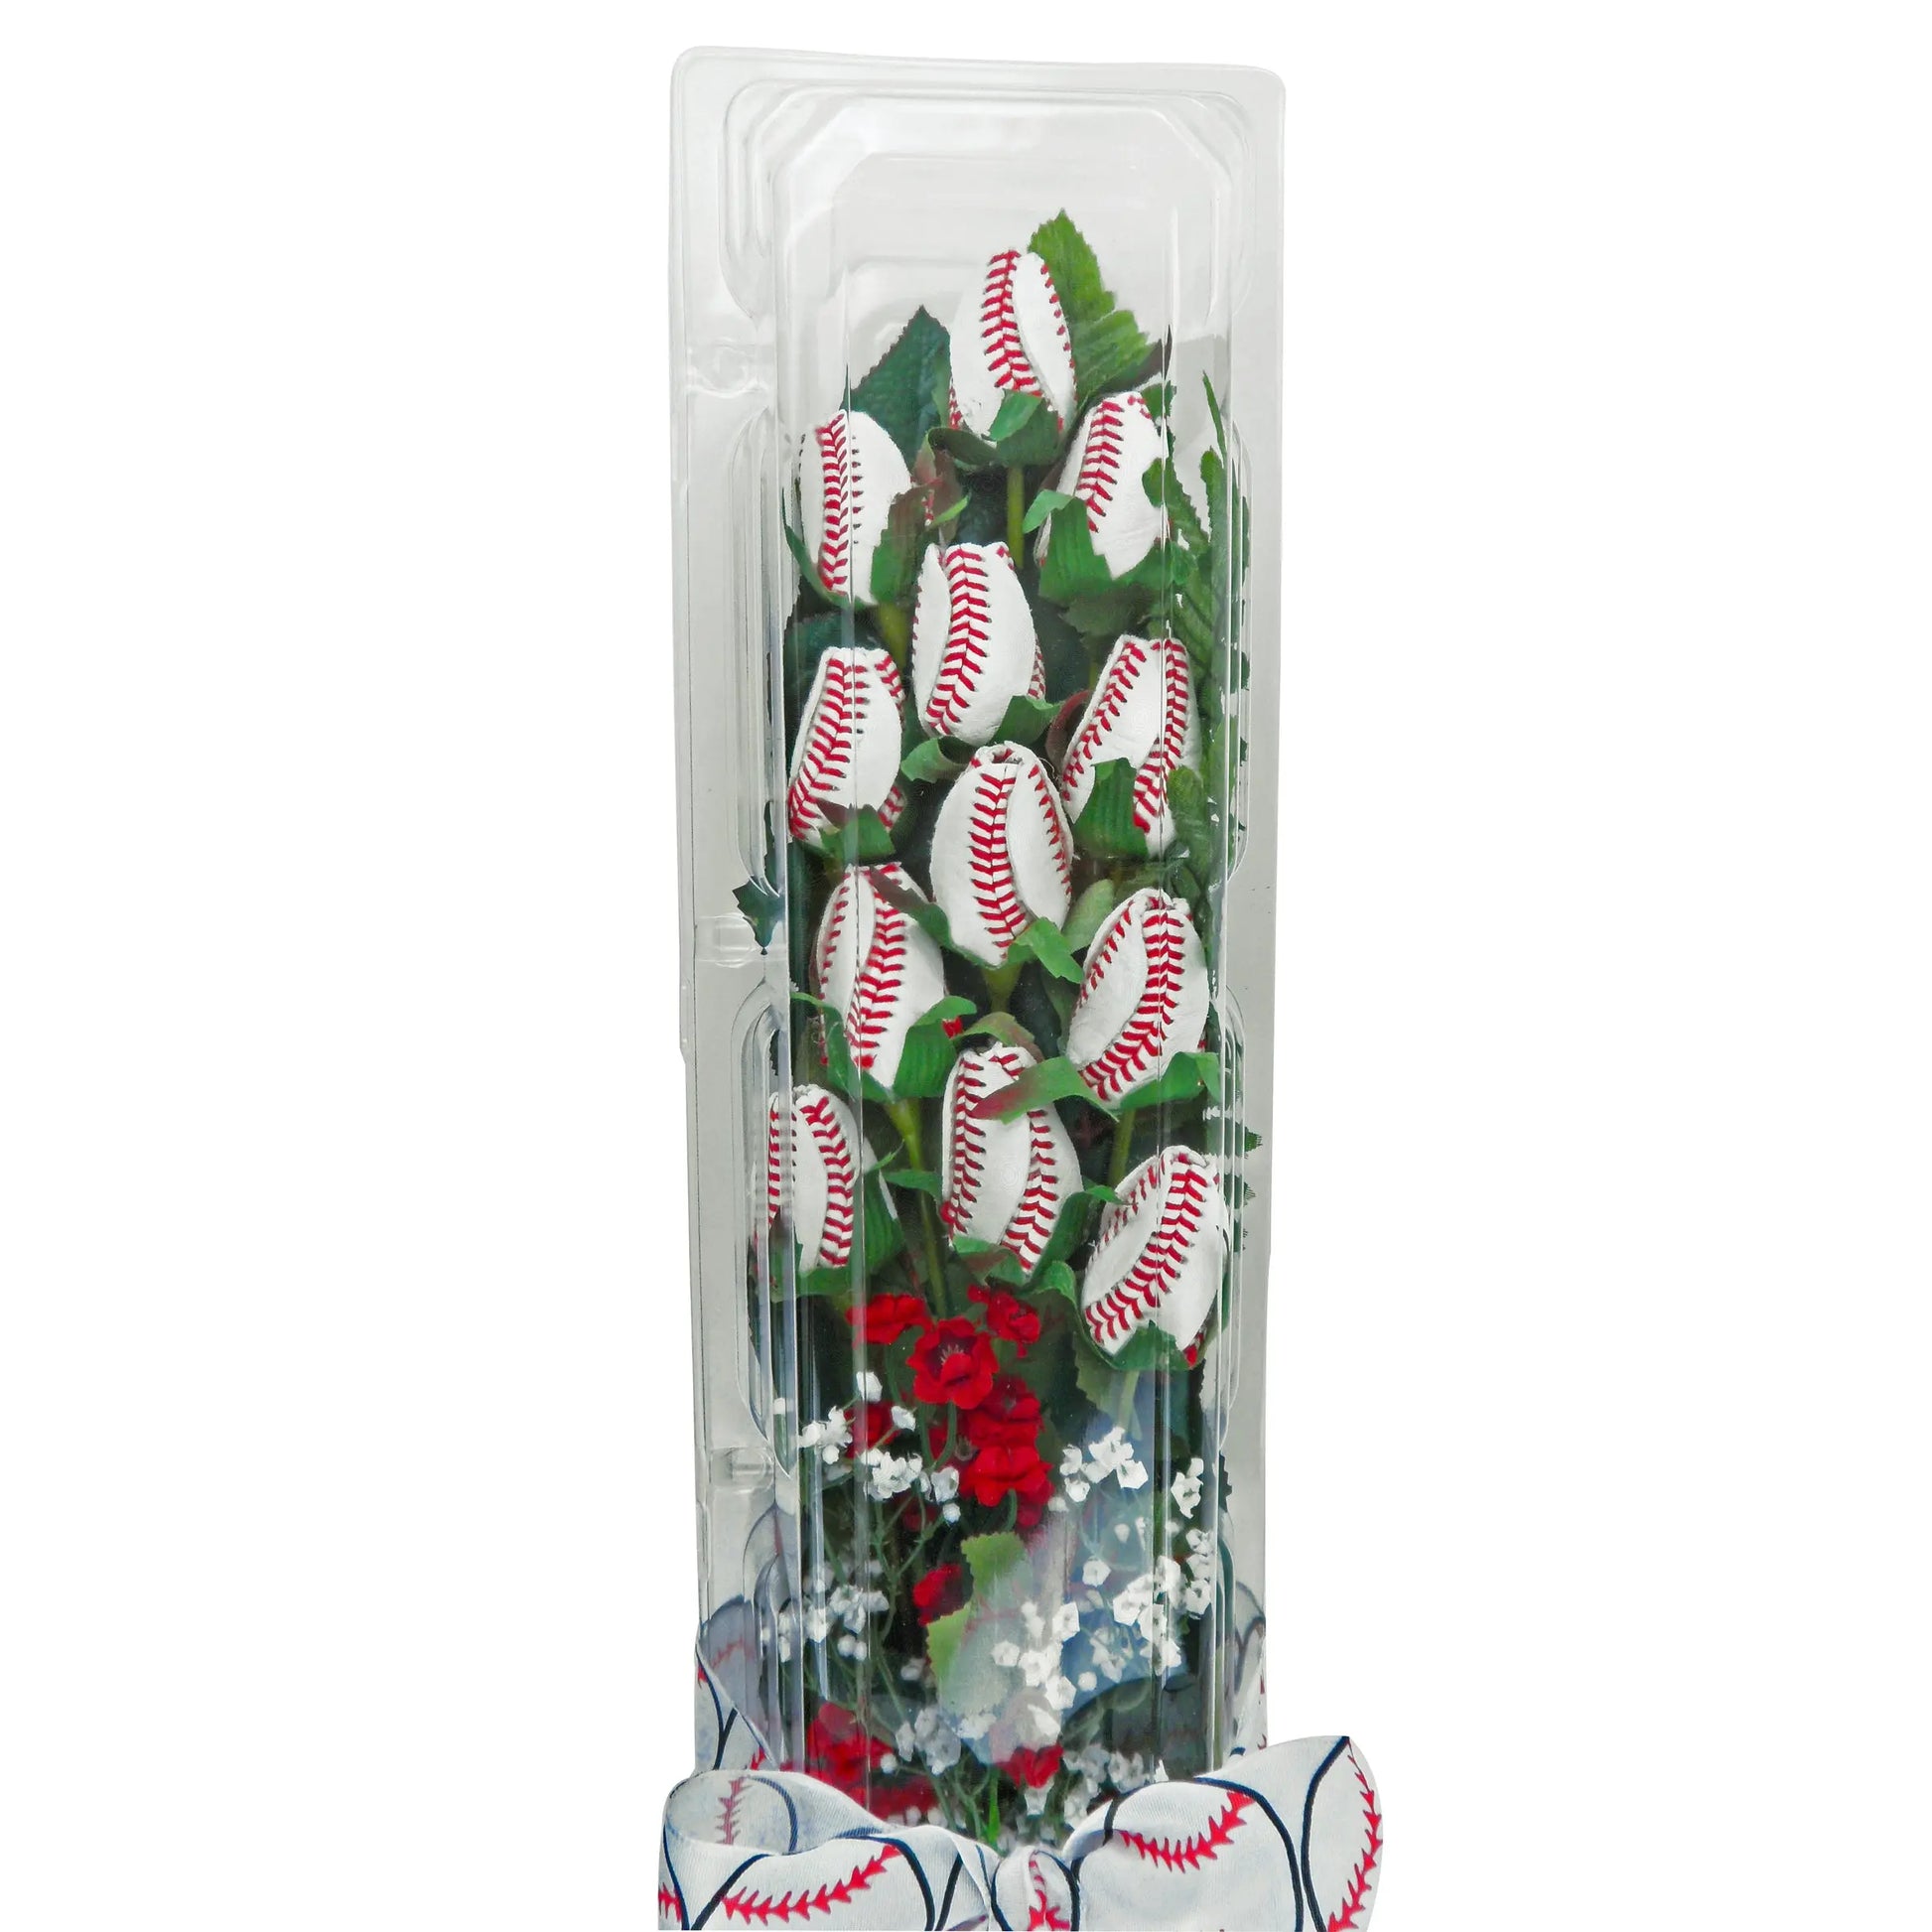 Baseball Rose Grand Slam Bouquet (12 Roses) Sports Roses  